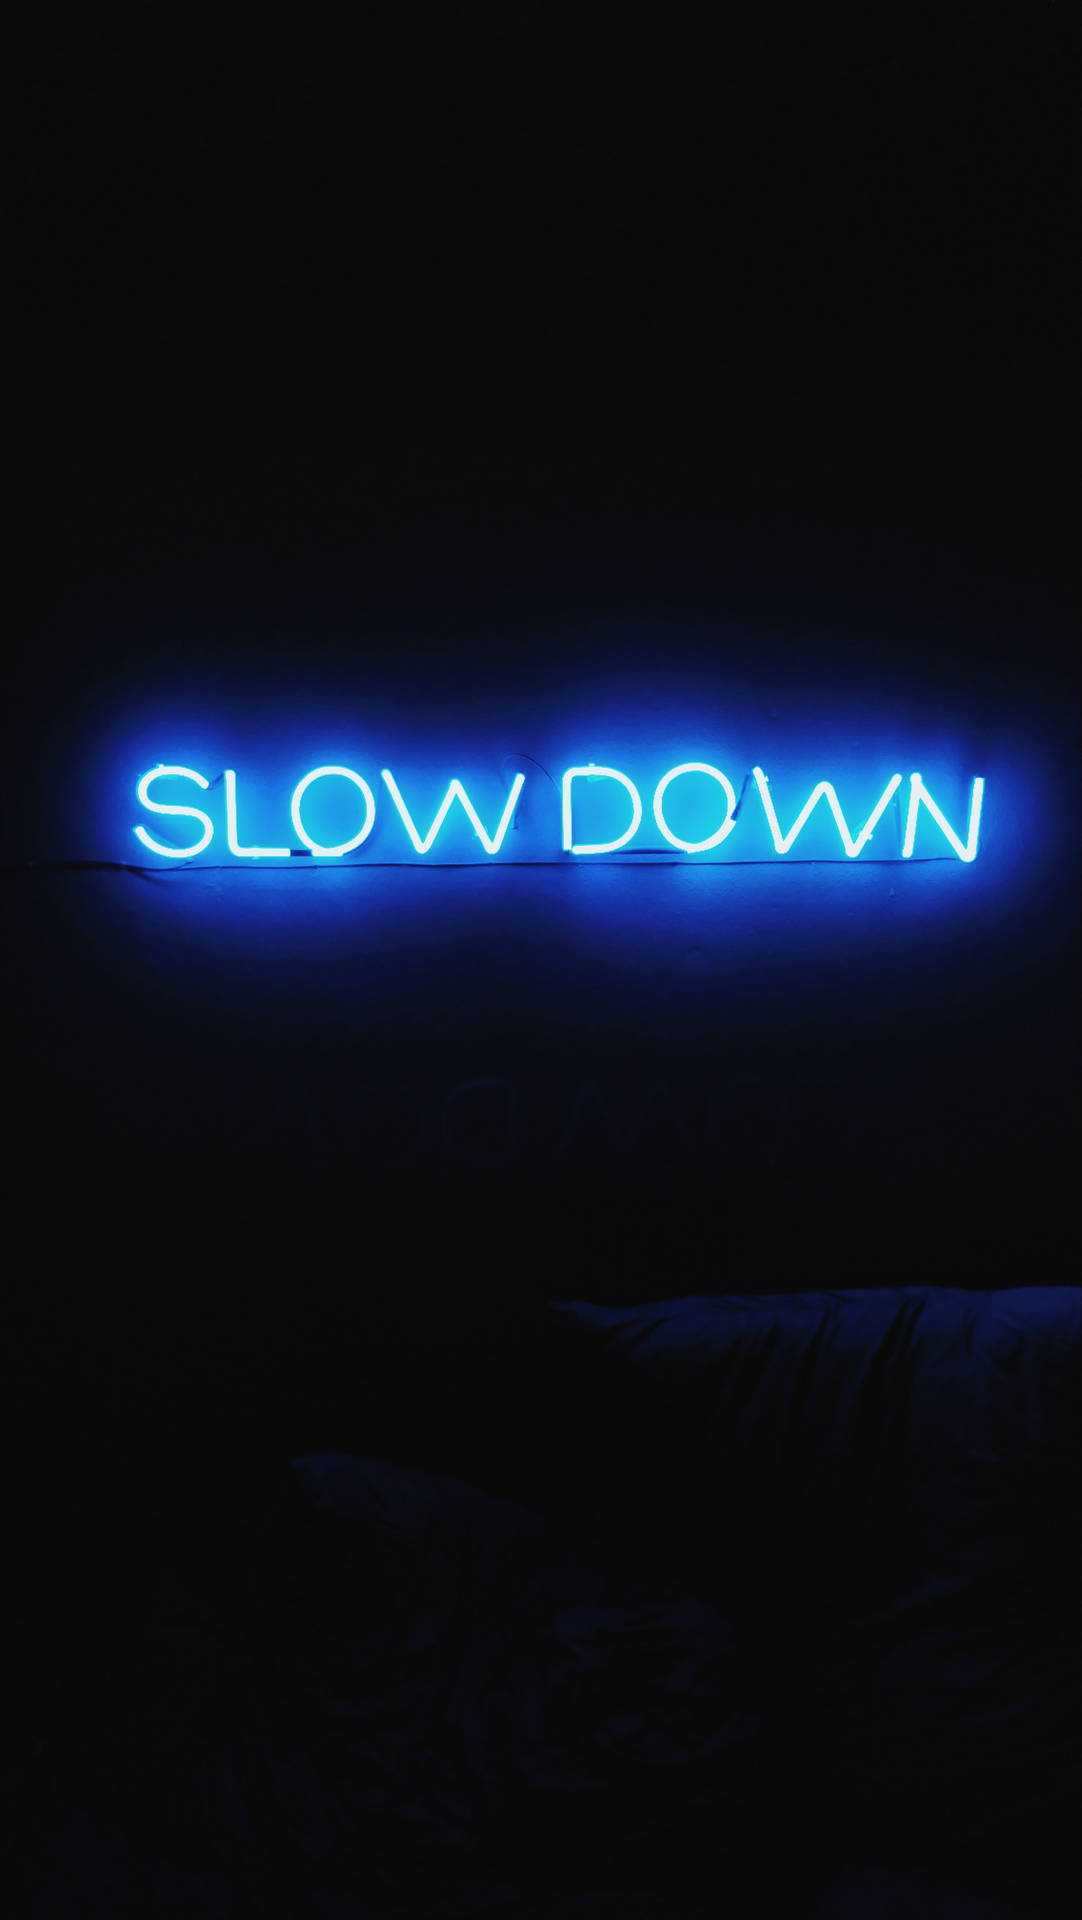 Slow Down Neon Sign Wallpaper